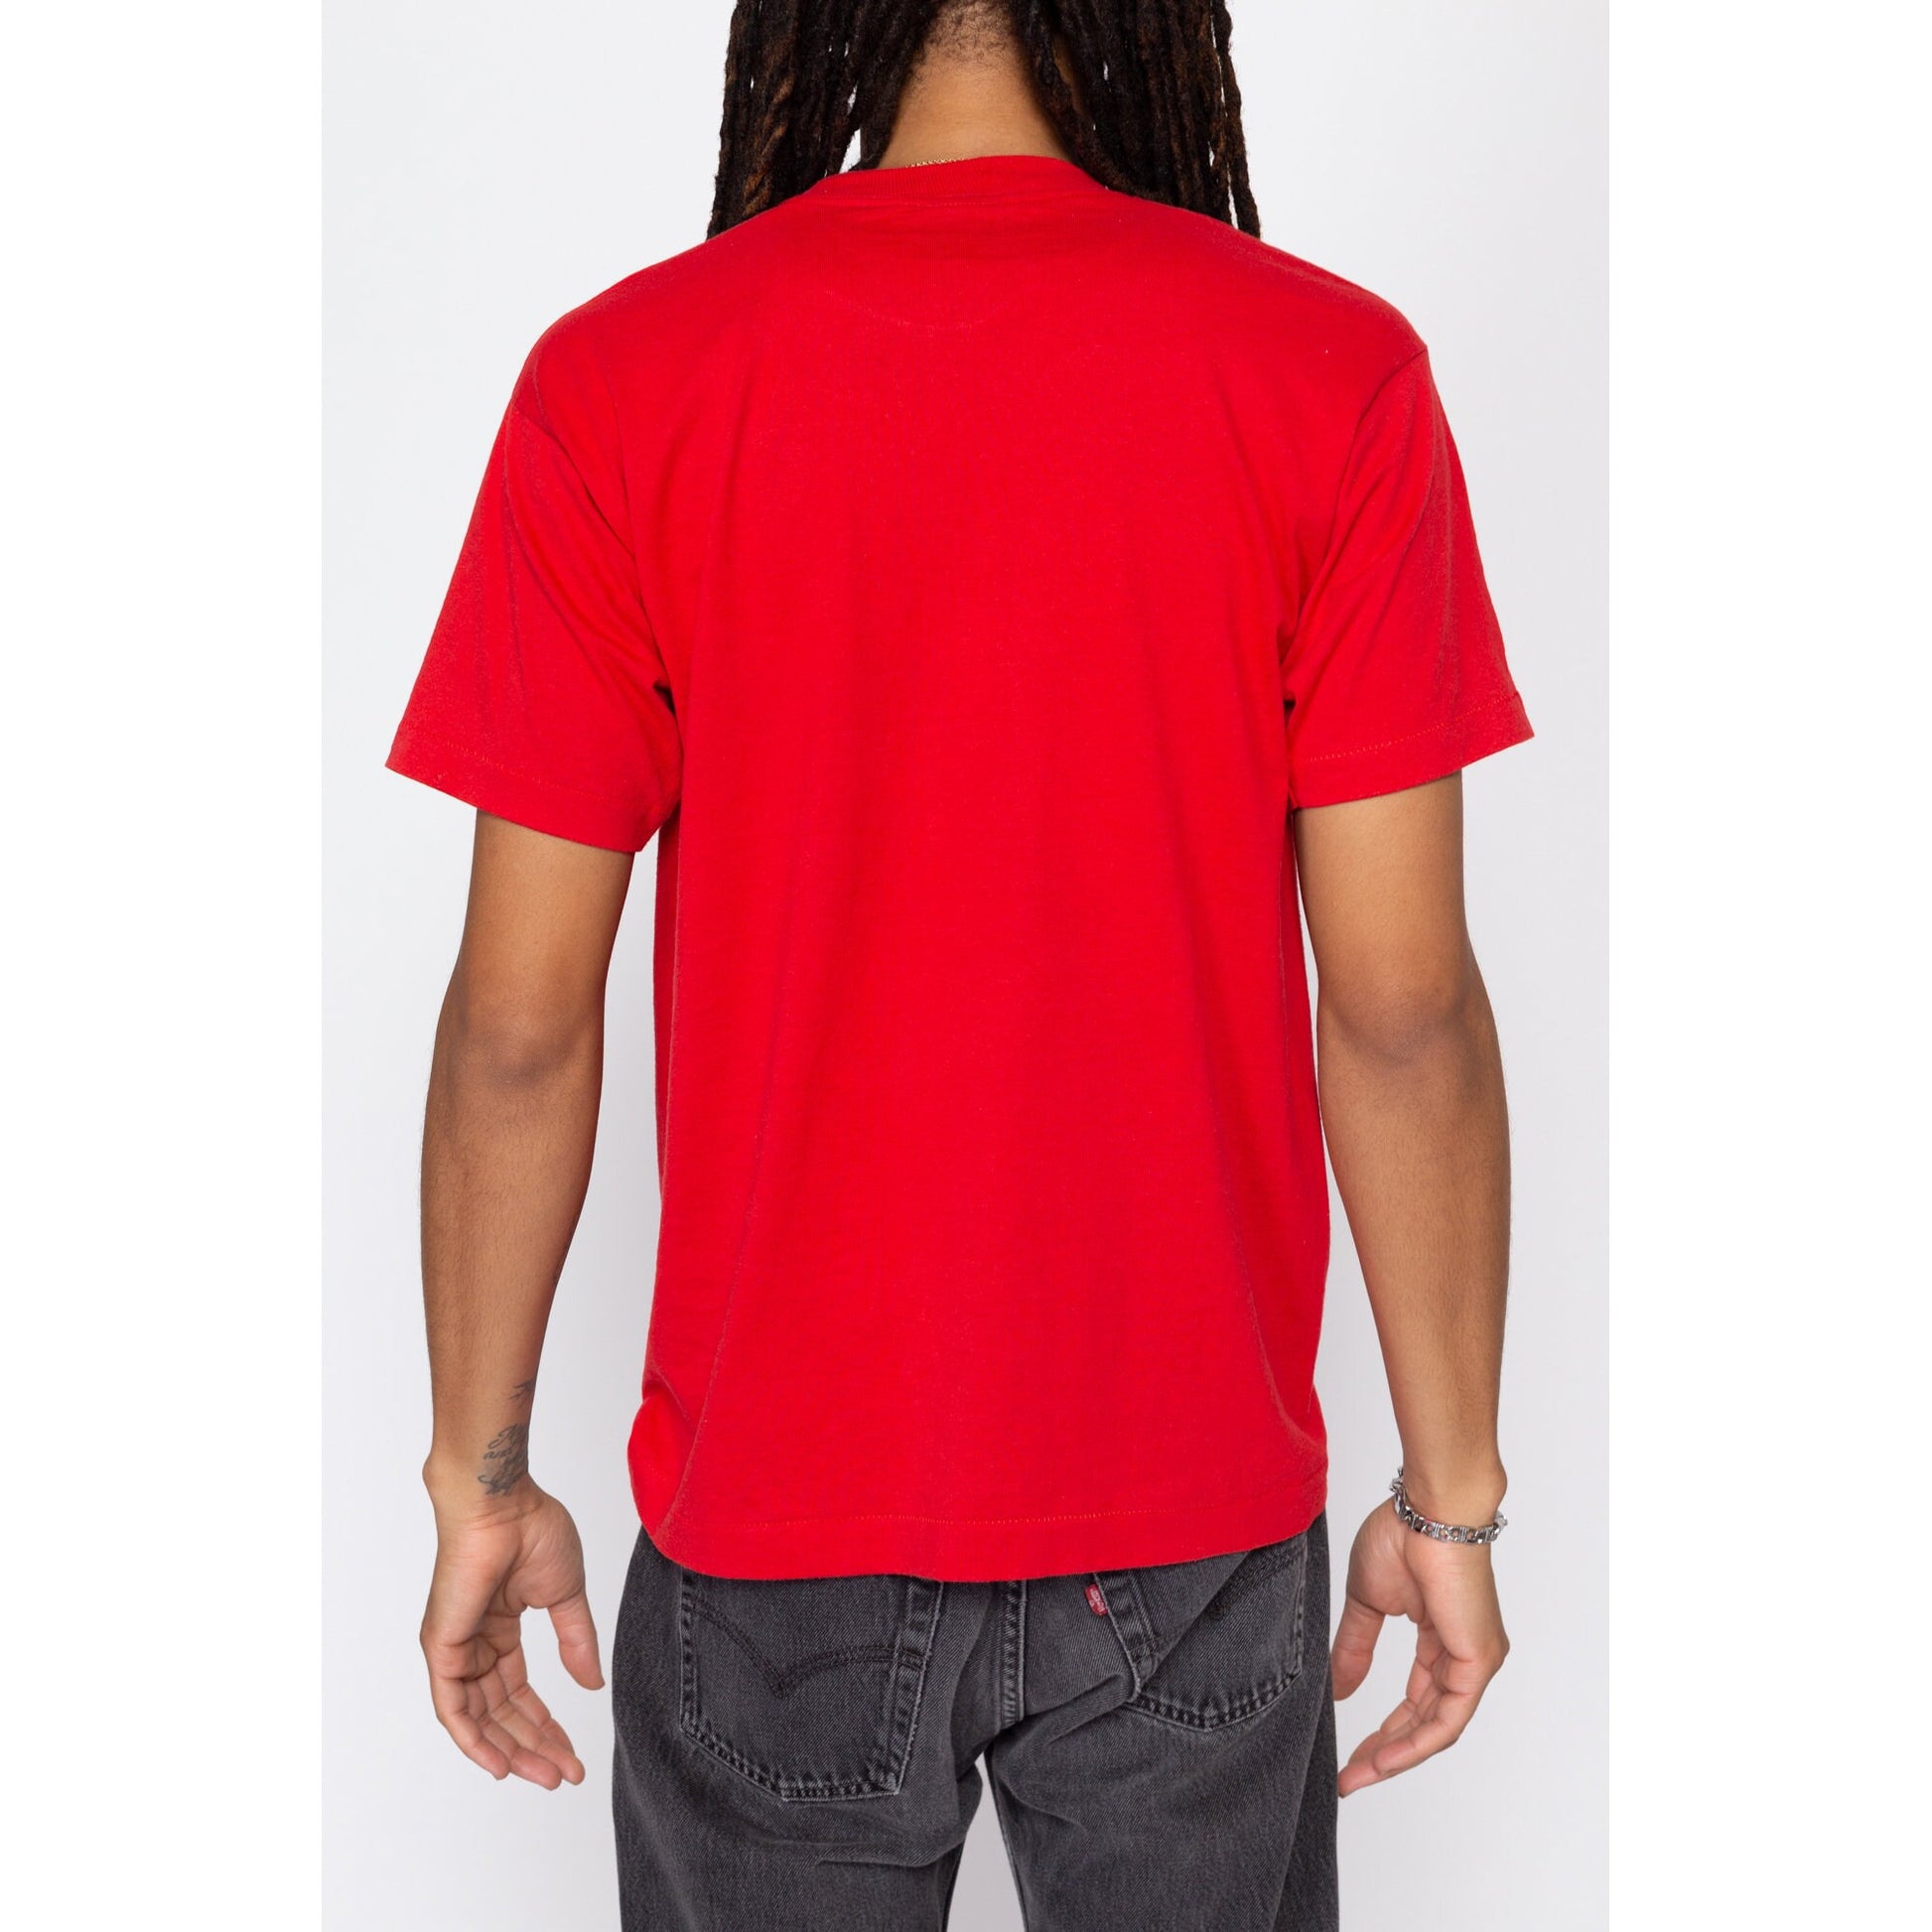 Medium 90 Eta Phi Beta Sorority 50th Anniversary T Shirt | Vintage Black History Detroit Michigan Red Graphic T Shirt